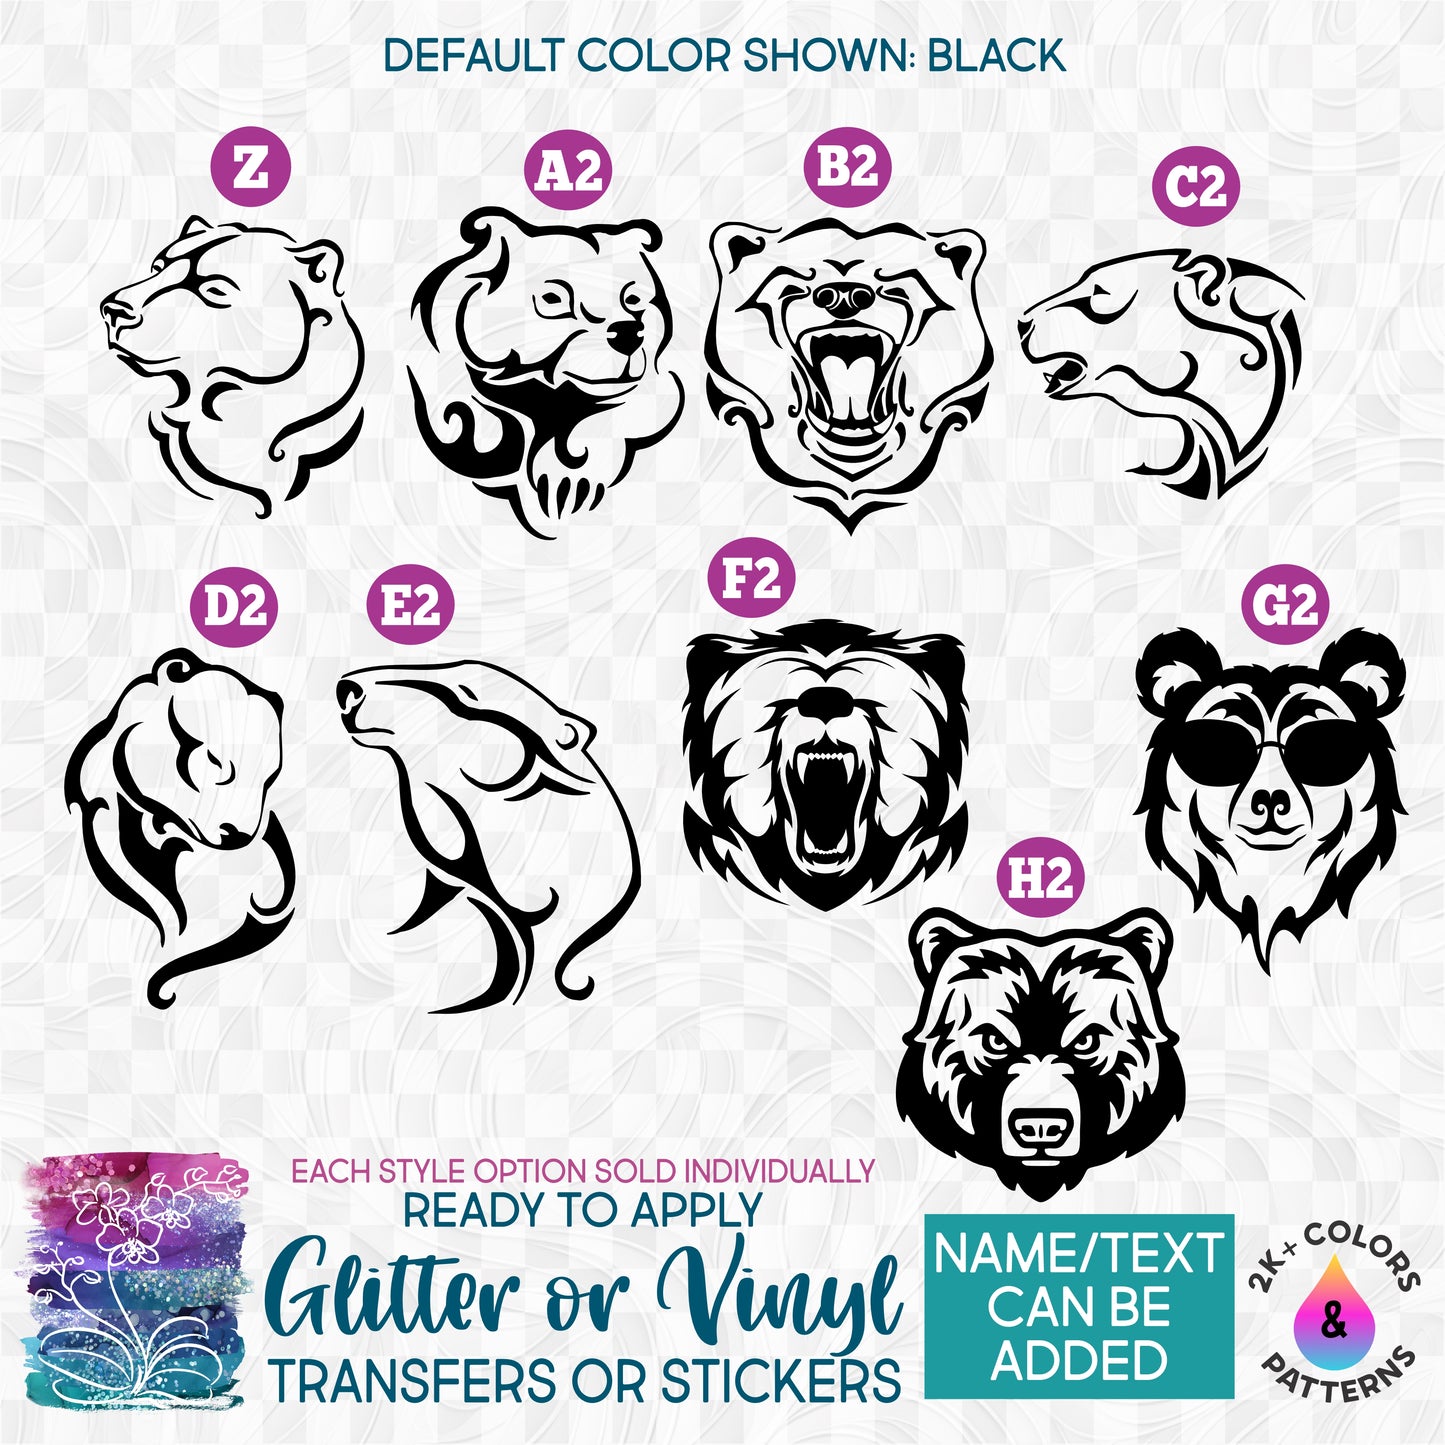 (s006-1) Grizzly Brown Black Polar Bear Glitter or Vinyl Iron-On Transfer or Sticker